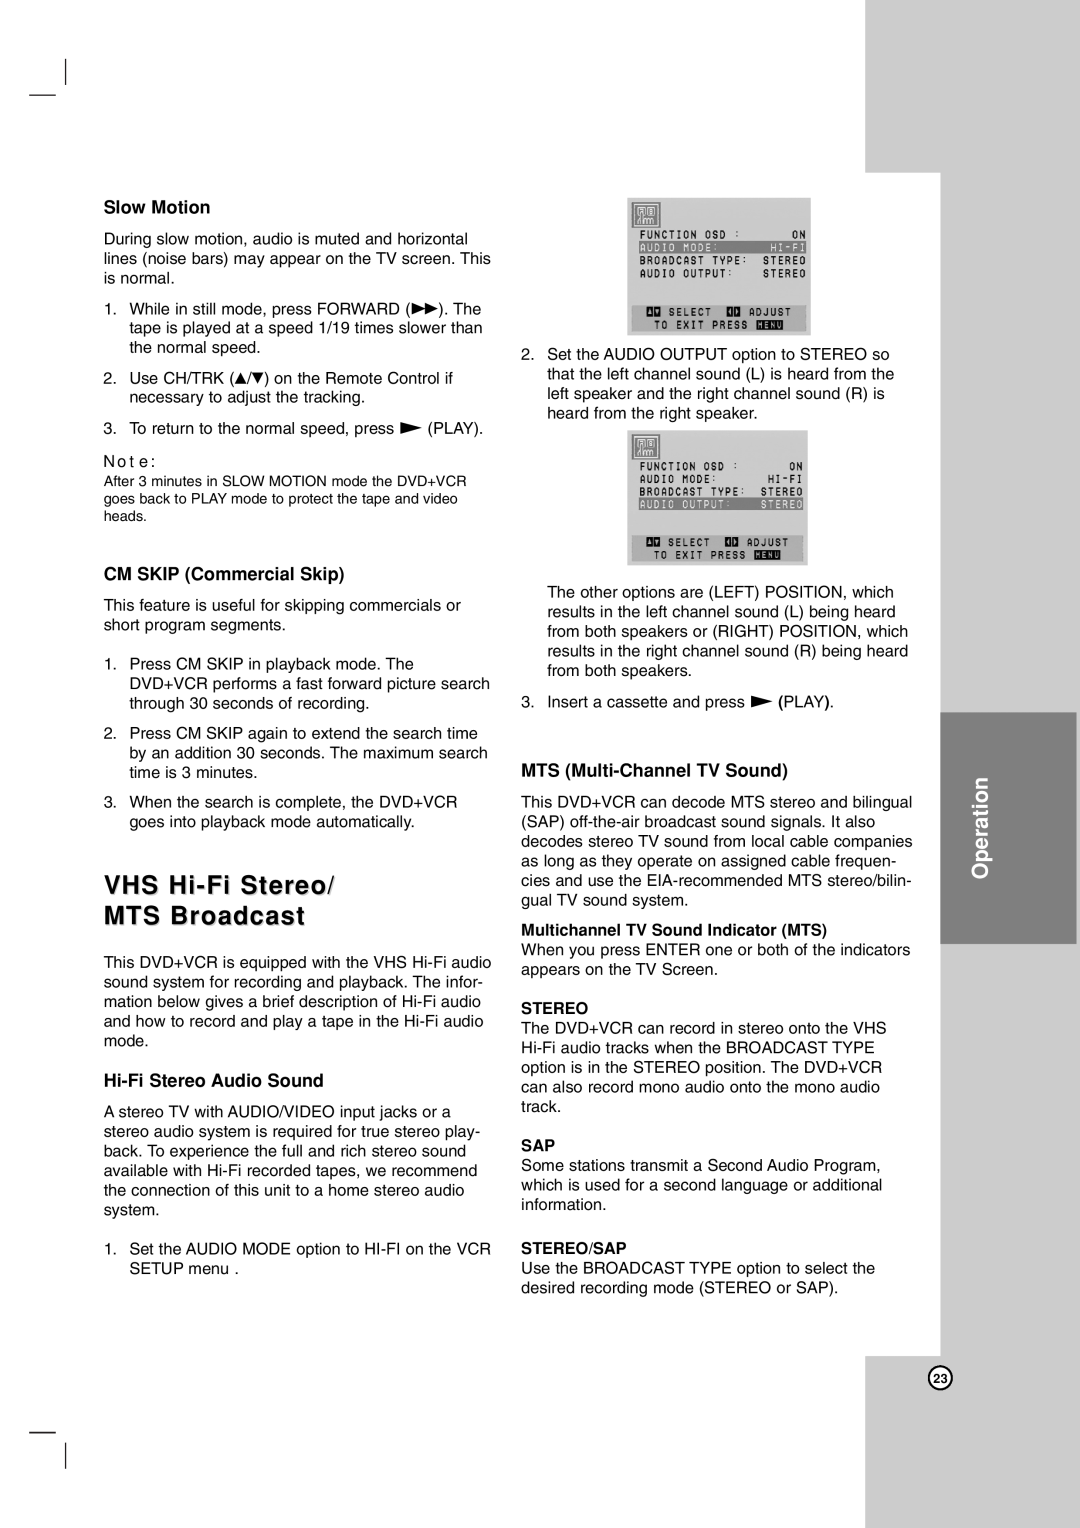 LG Electronics LDX-514 owner manual VHS Hi-Fi Stereo MTS Broadcast, Operation, Slow Motion, CM SKIP Commercial Skip 